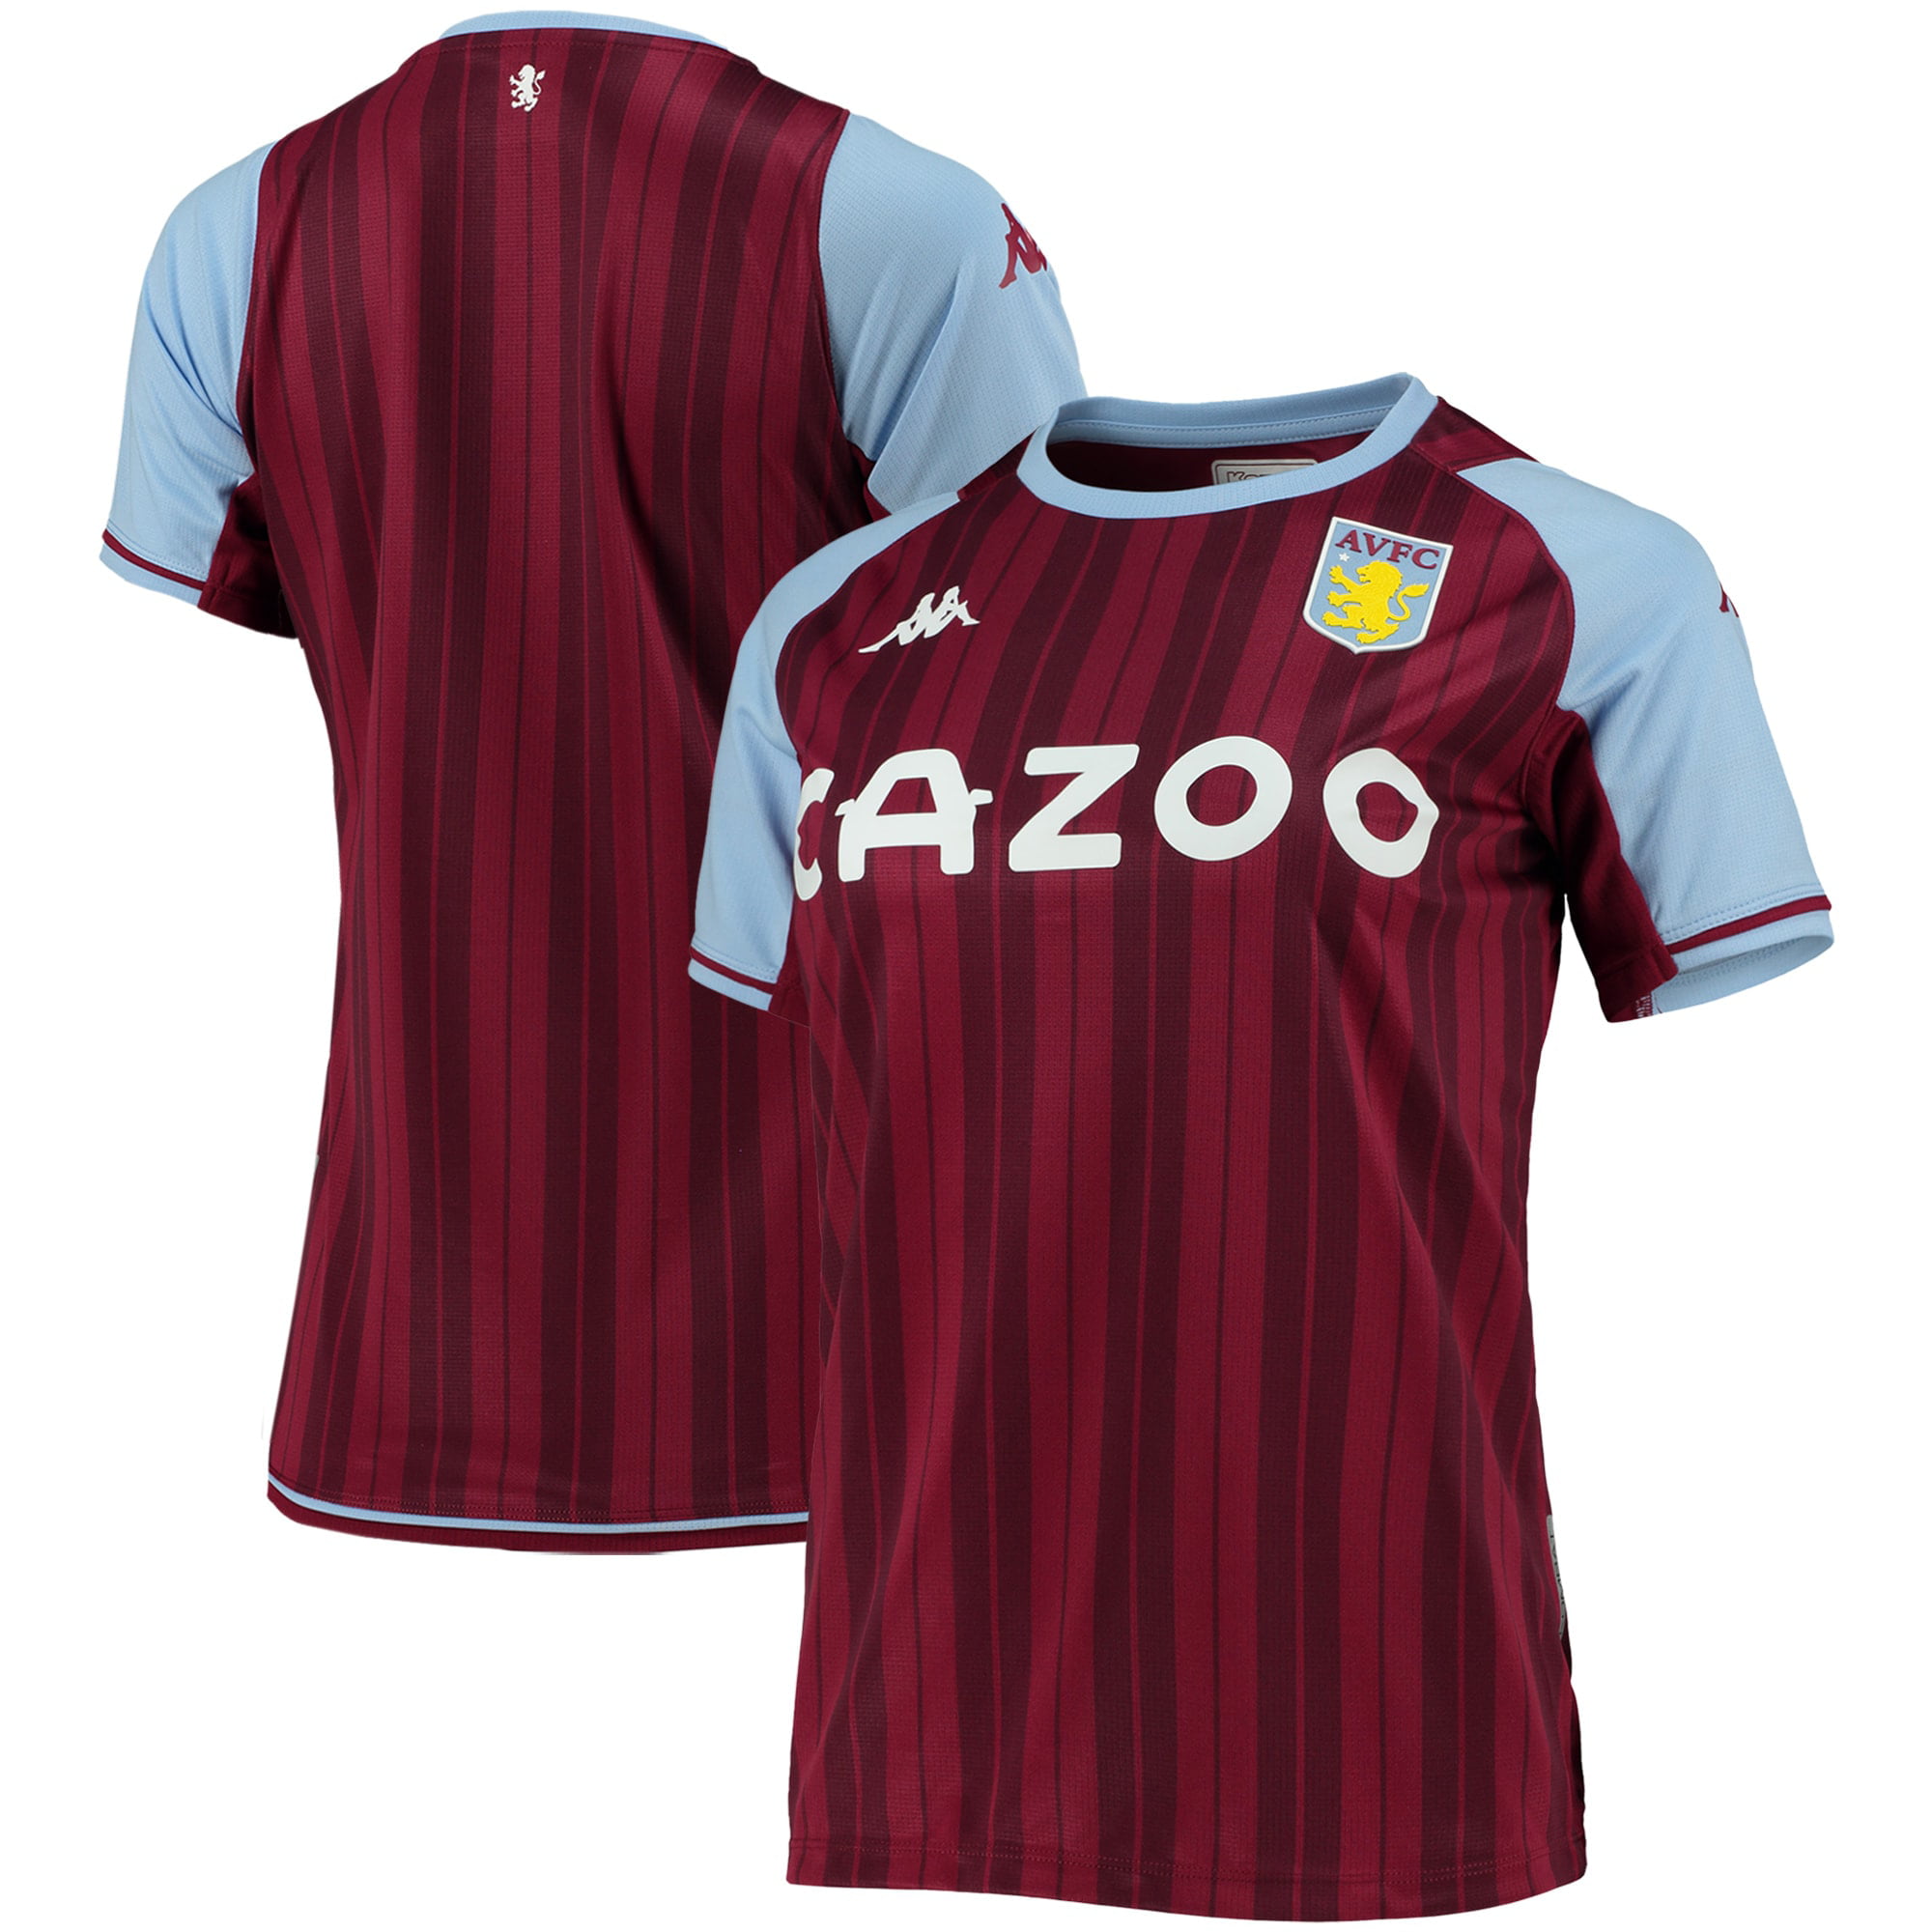 Kappa Aston Villa Football Shirt New Size 2XL Women's Kappa 3rd Shirt 